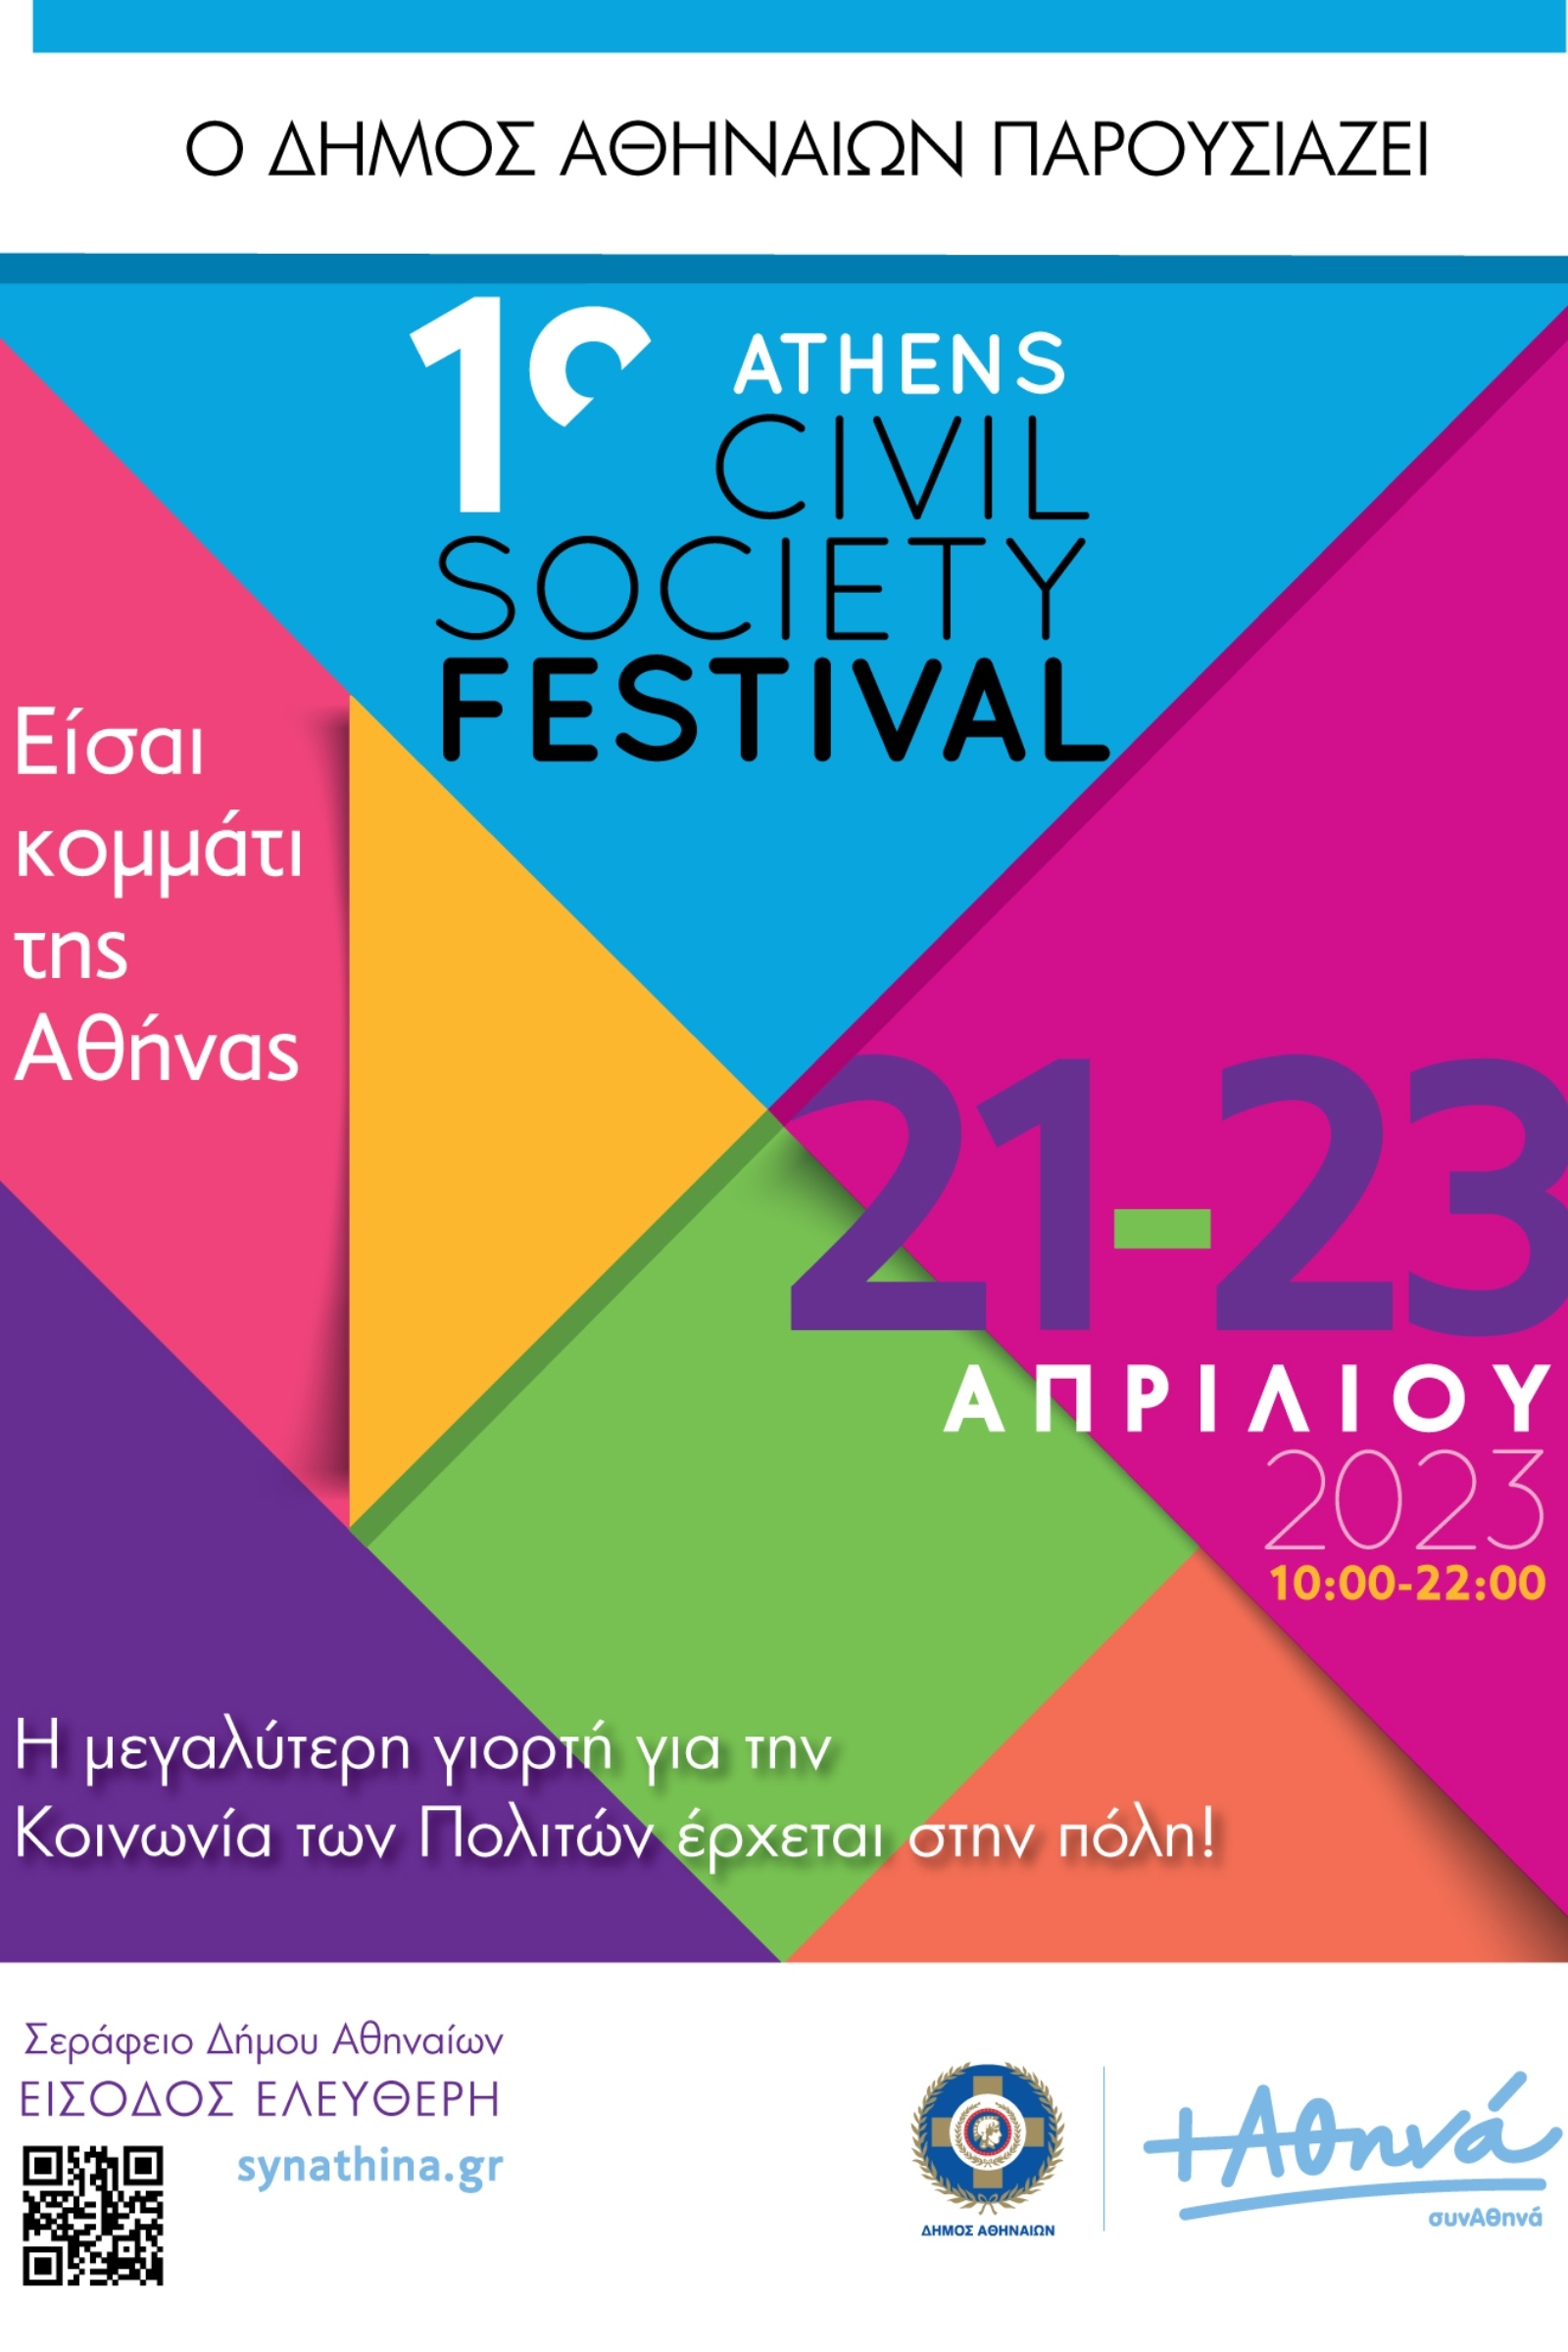 Athens Civil Society Festival